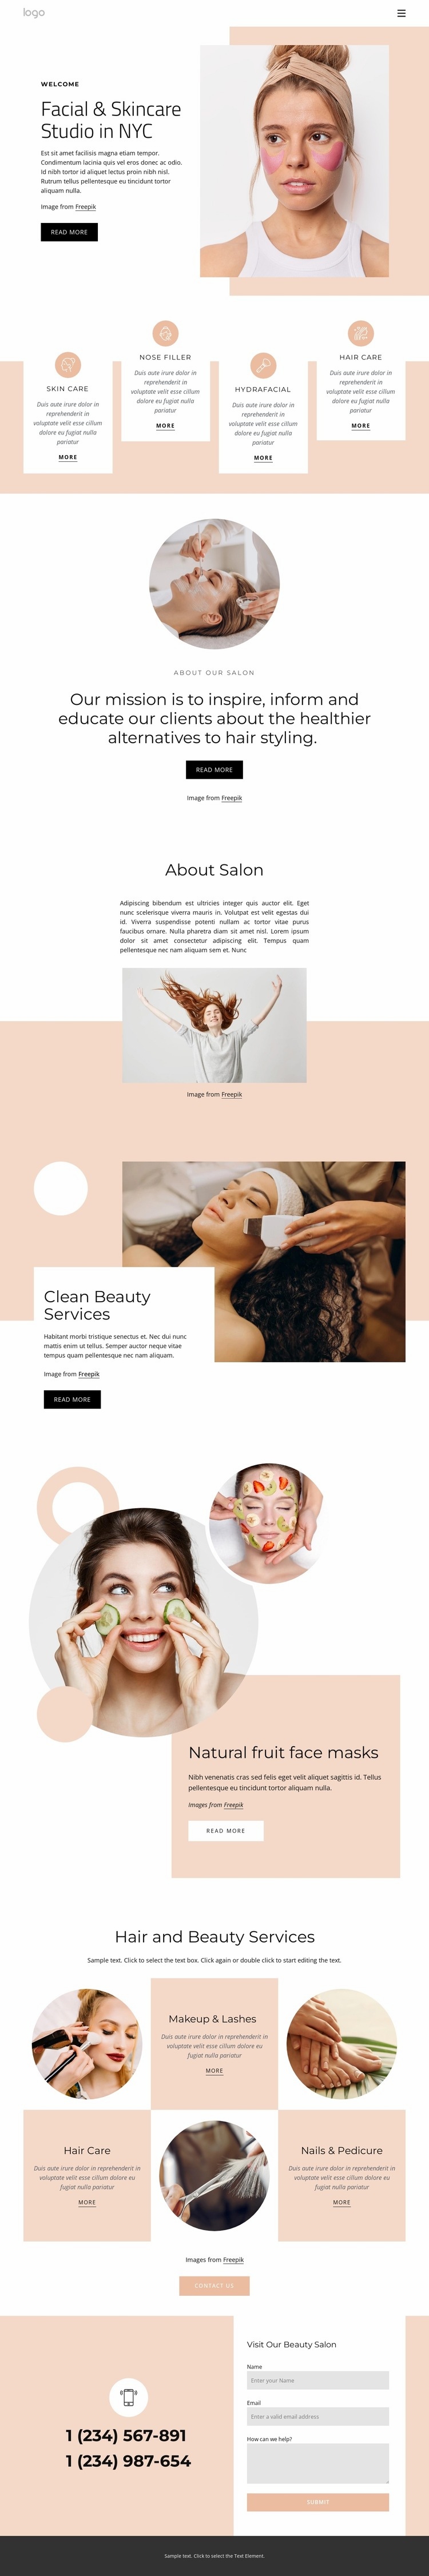 Facial beauty studio Web Page Design